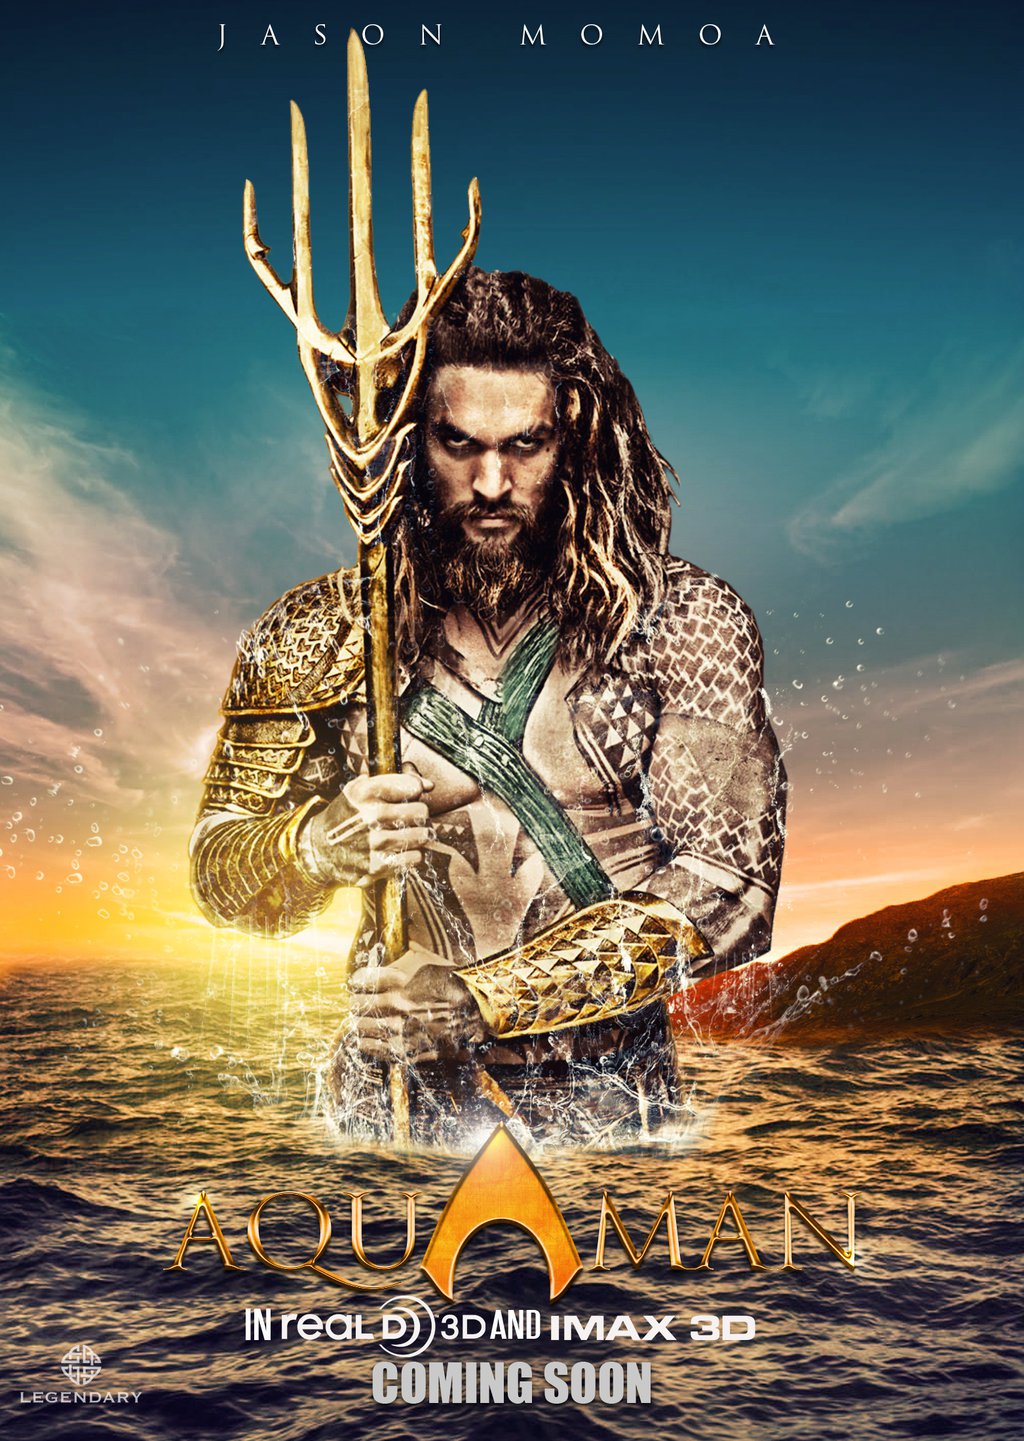 Jason Momoa Aquaman Poster Astound Me D A Kr Lak